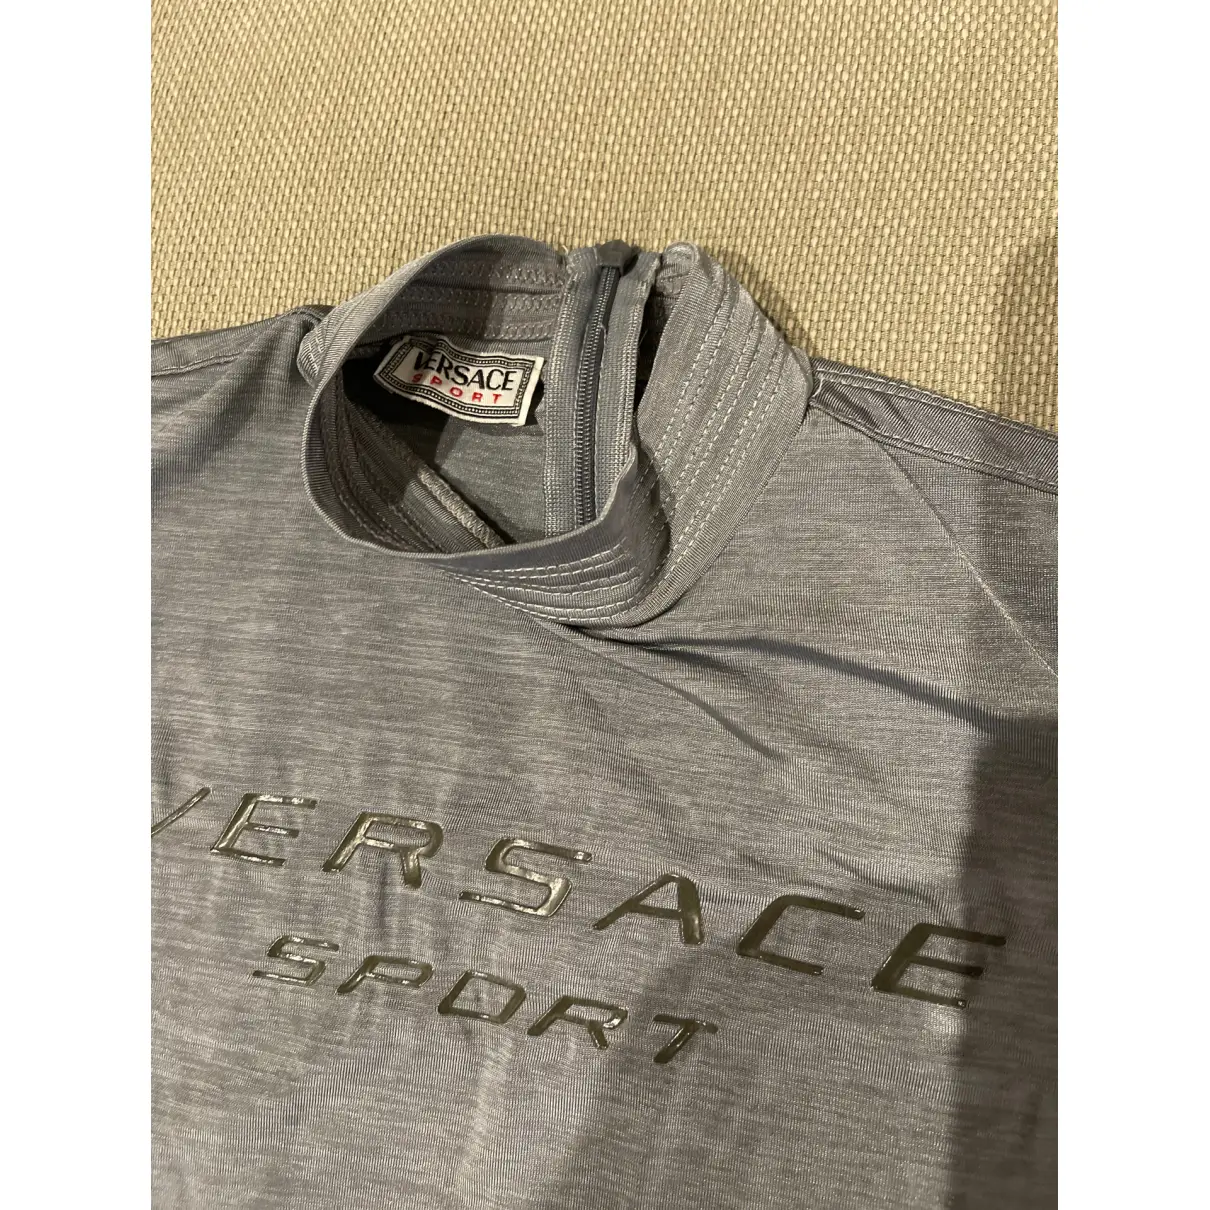 Buy Versace T-shirt online - Vintage